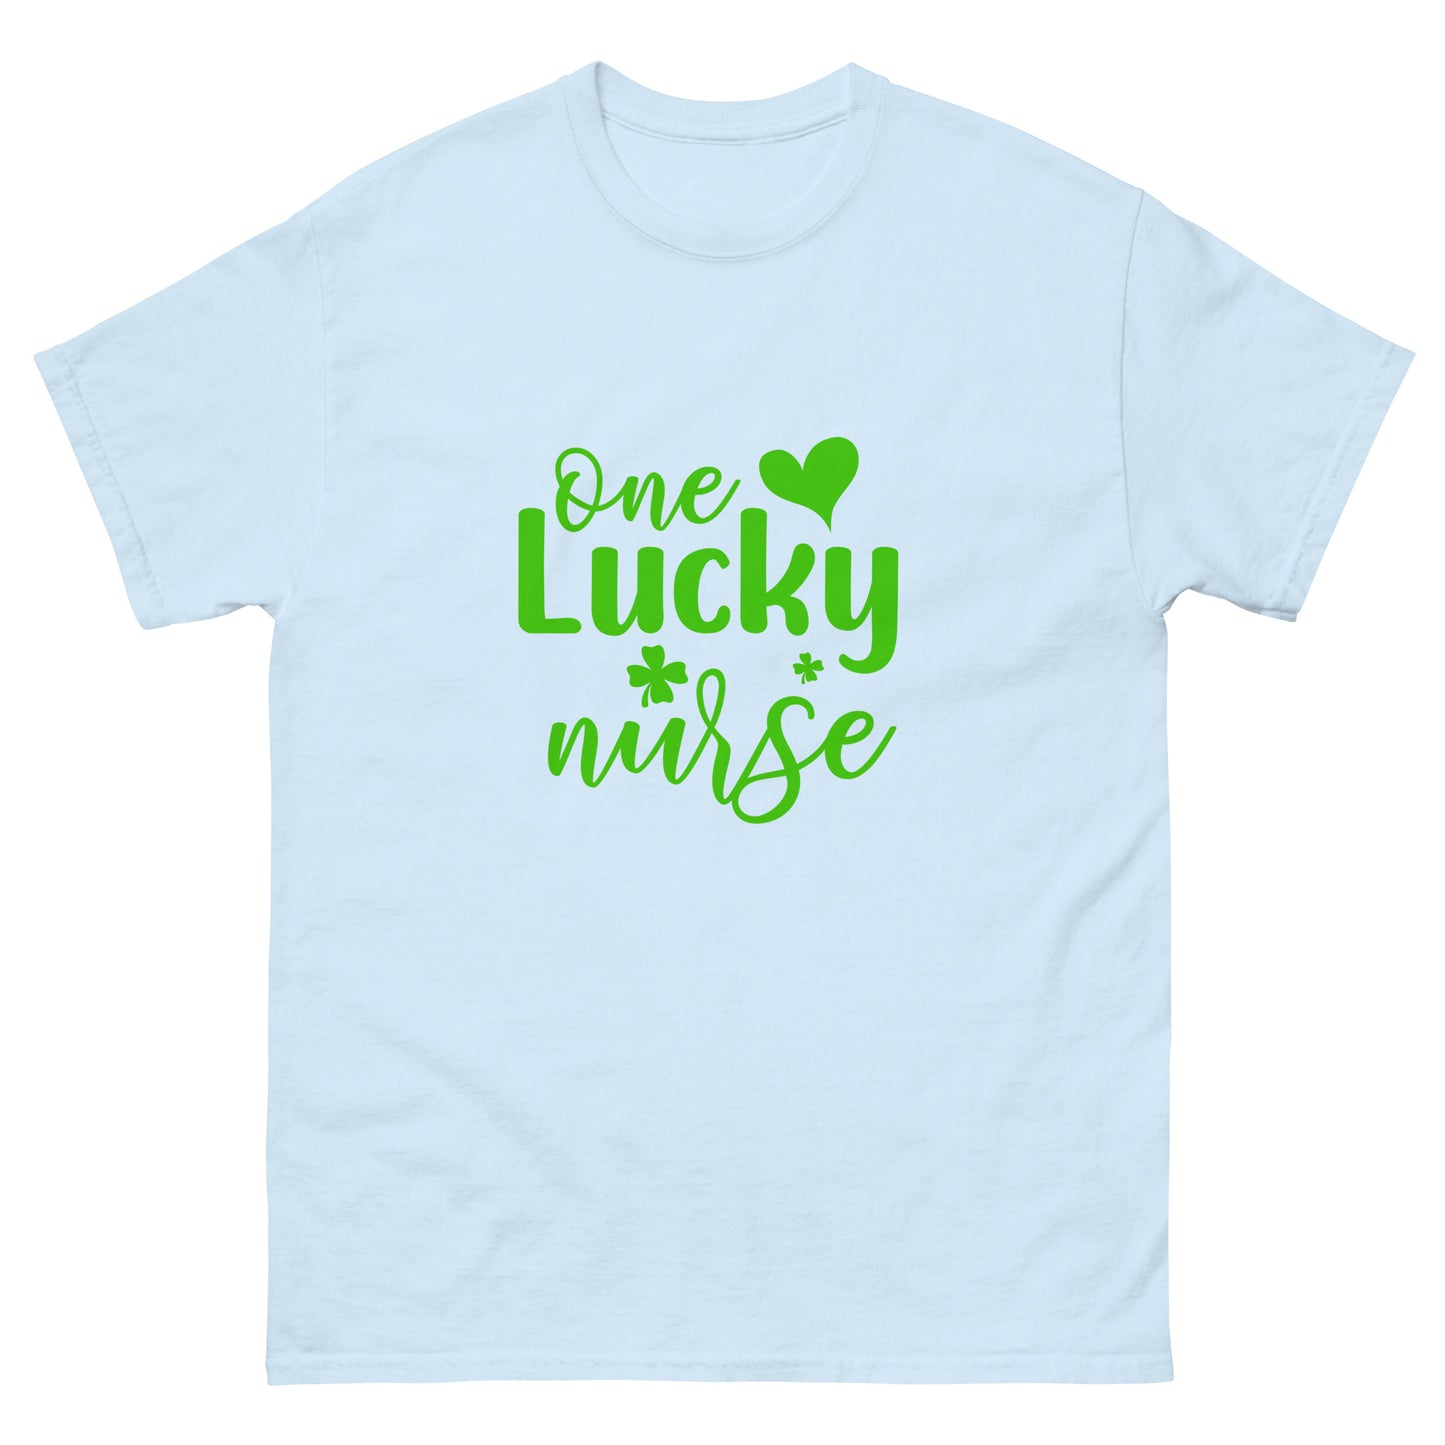 One Lucky Nurse - St. Patricks's Day - classic tee